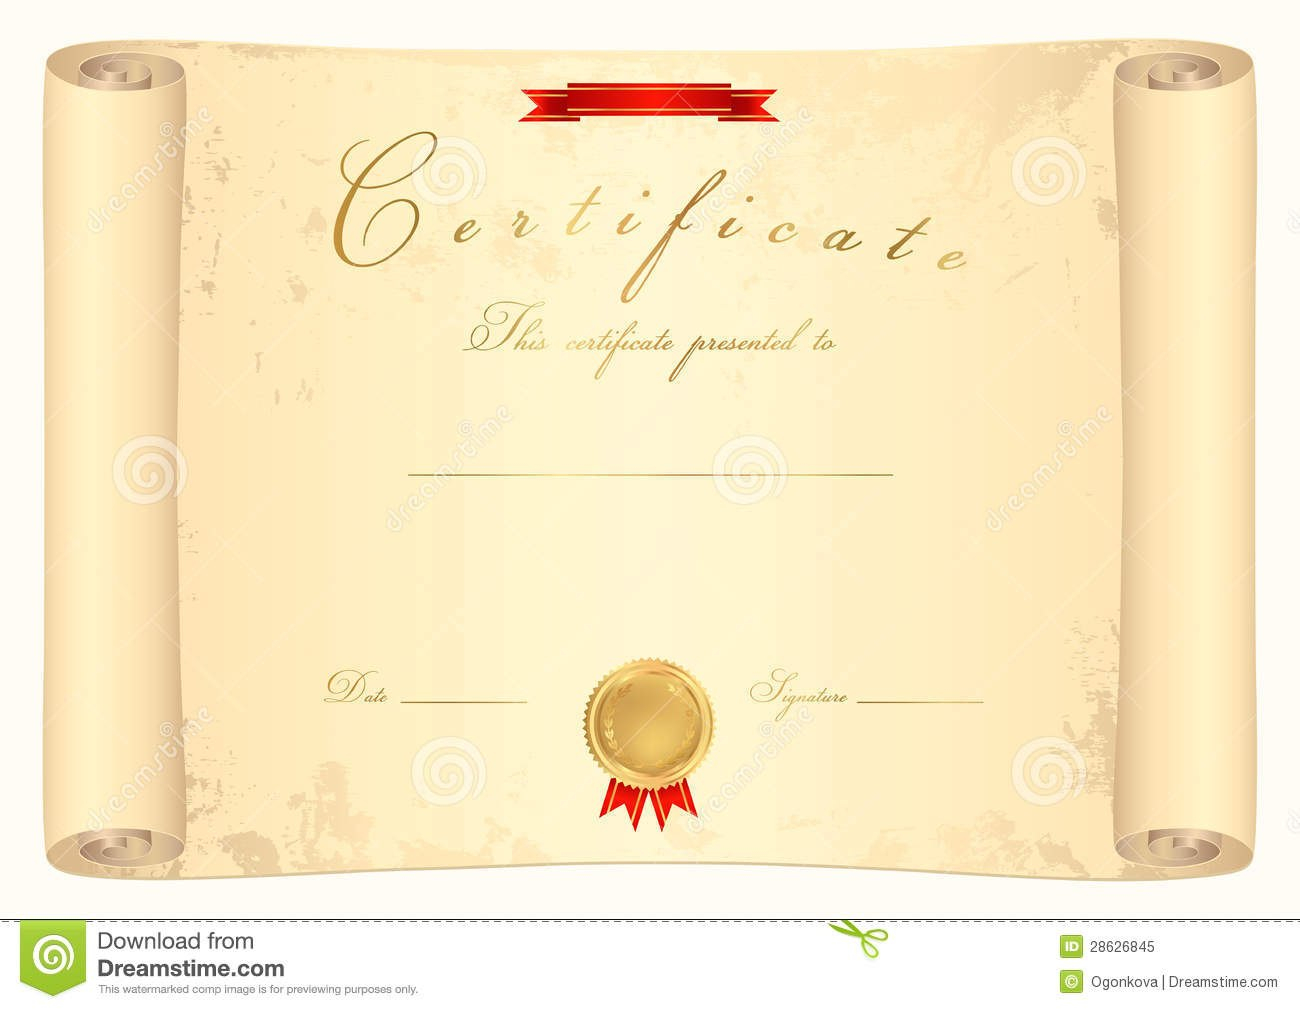 Scroll Certificate Templates  Sansurabionetassociats in Scroll Certificate Templates